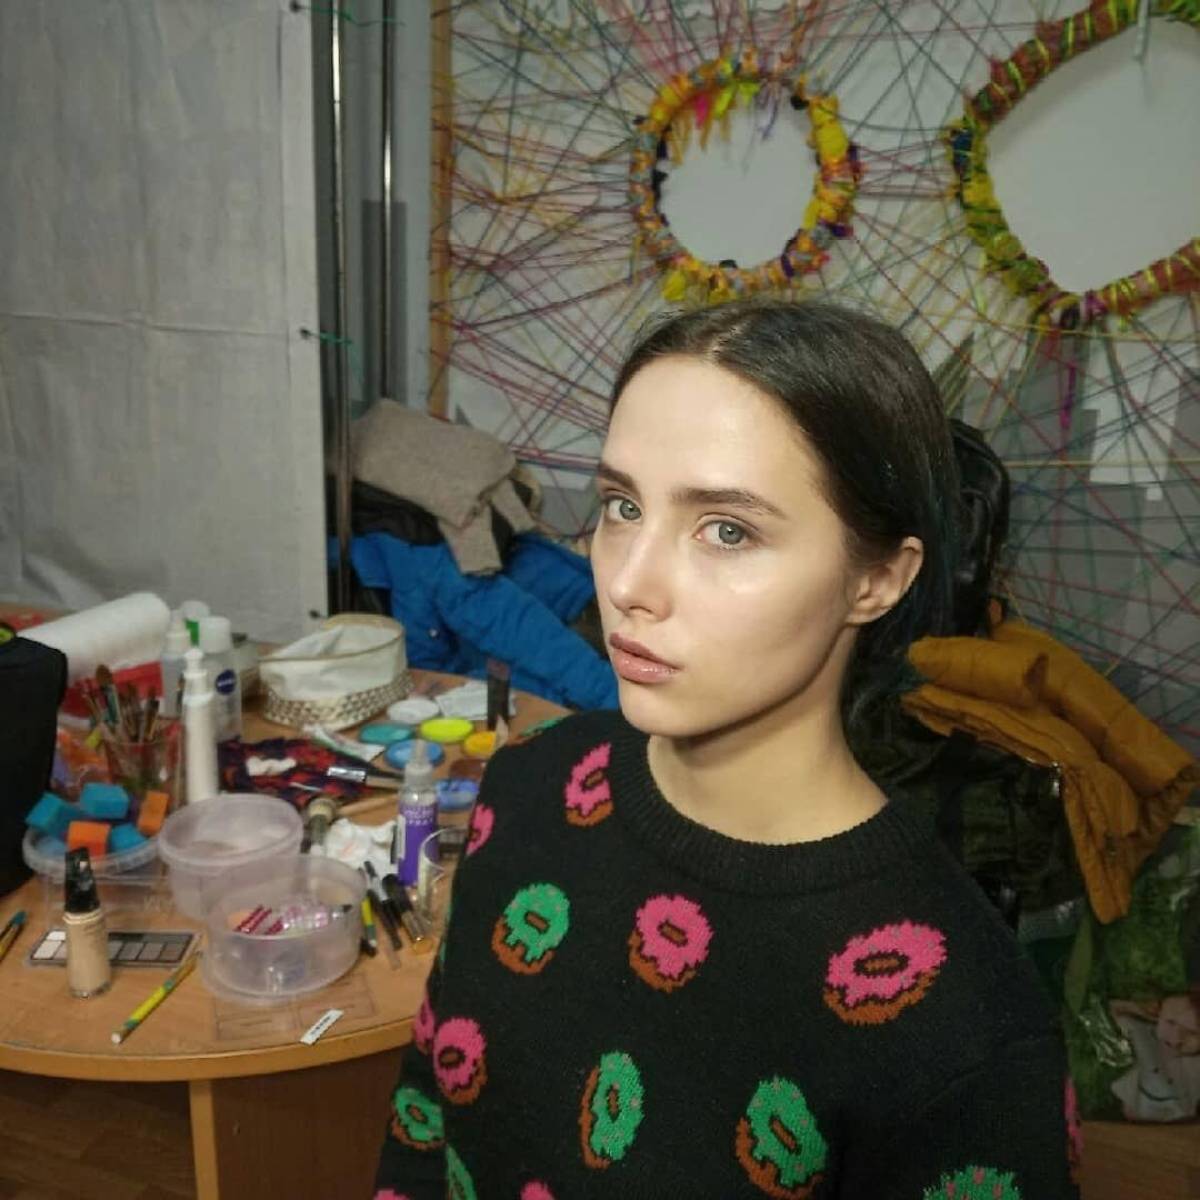 Masha Babko at her makeup table